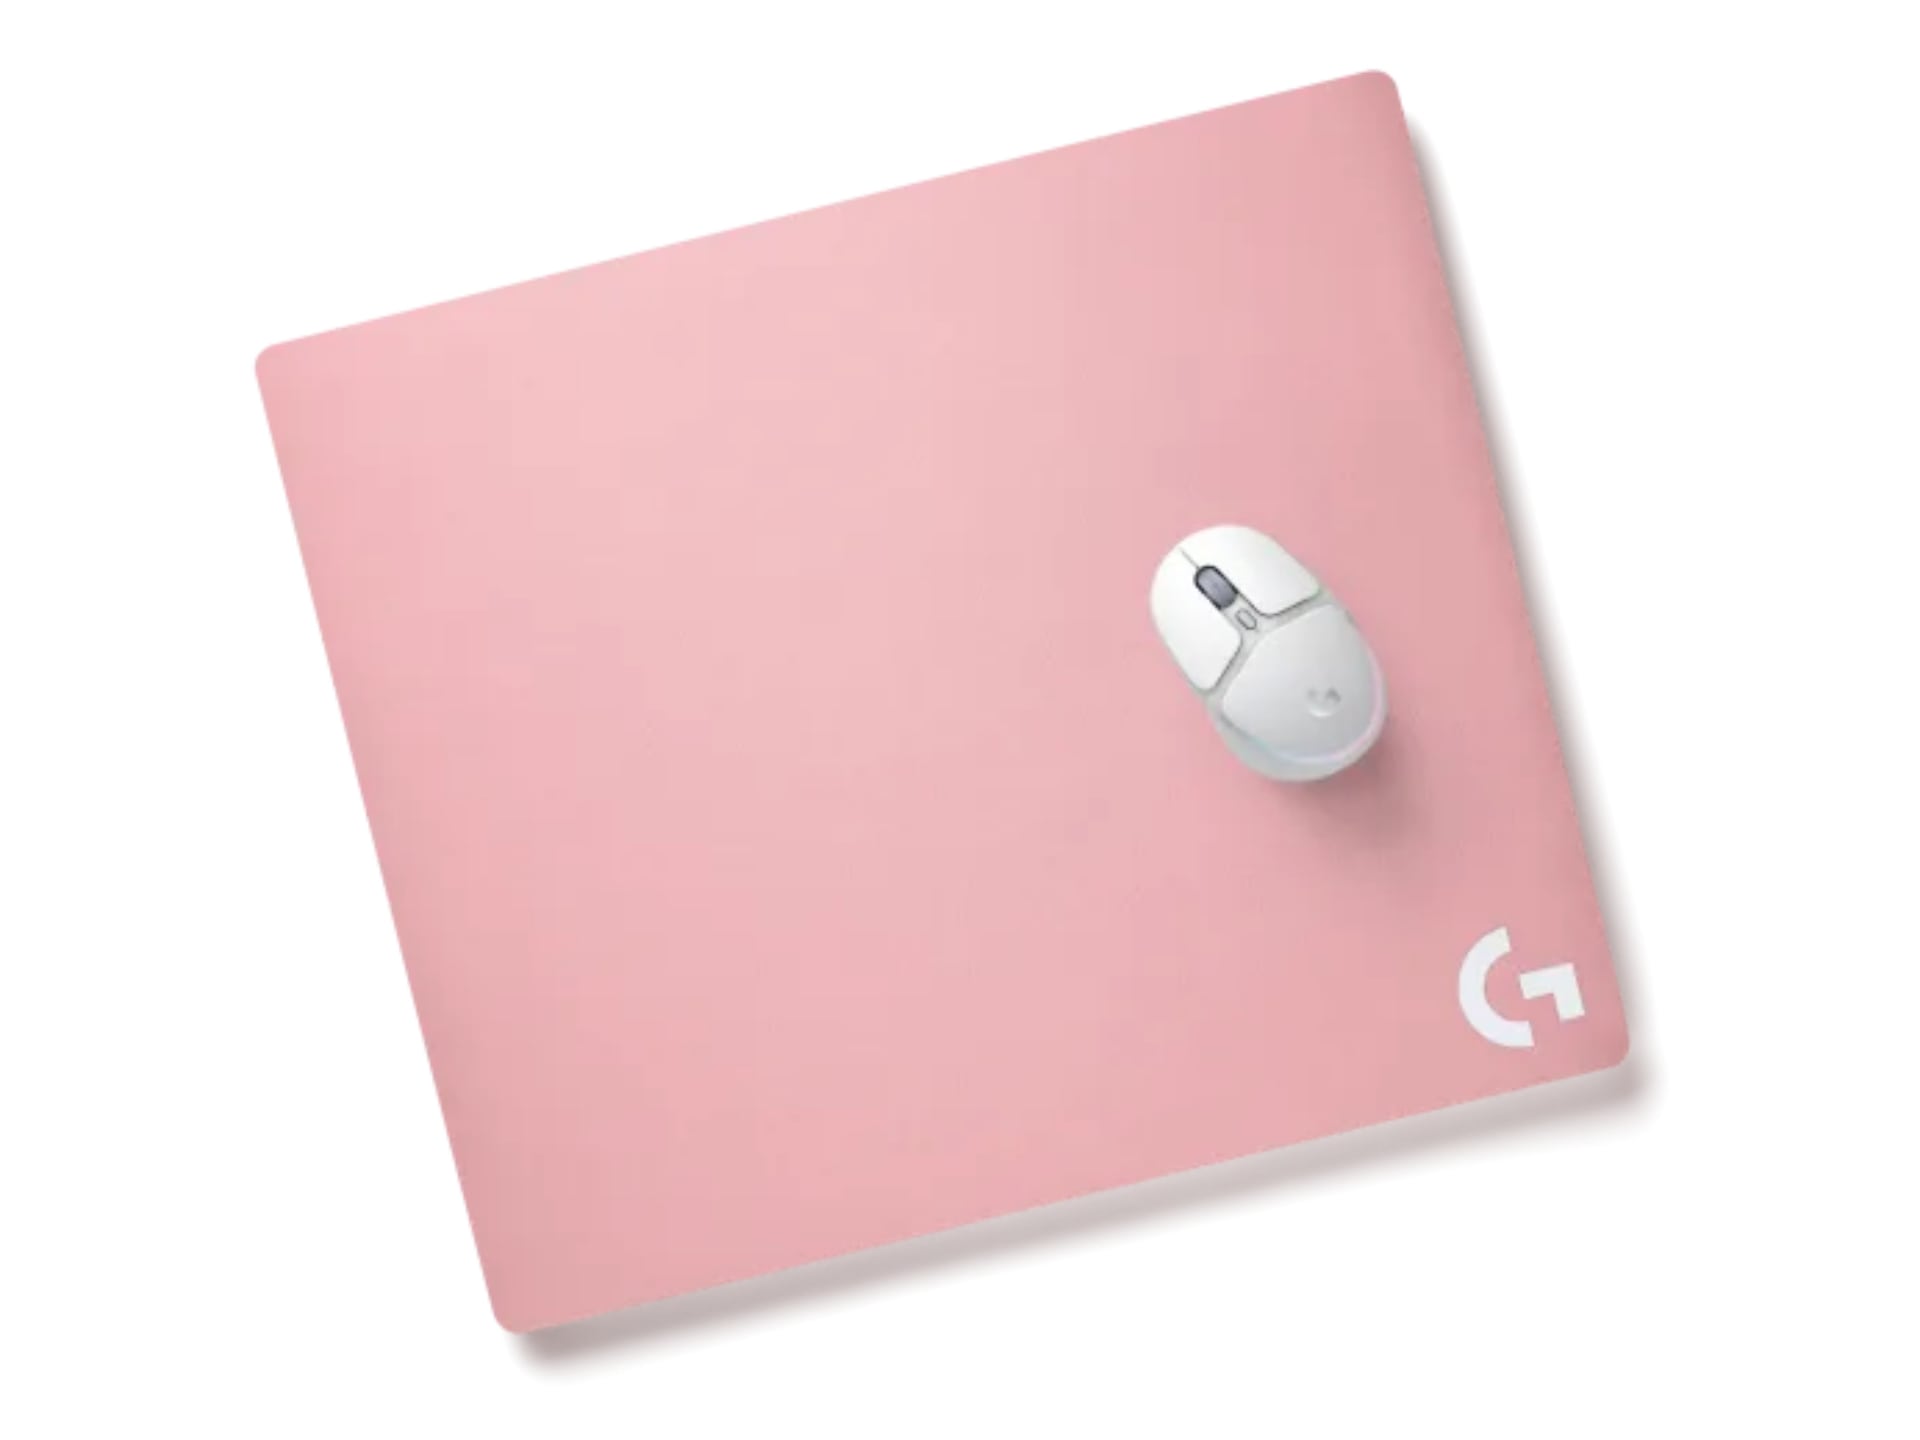 accessories mousepad pink 2 MMOSITE - Thông tin công nghệ, review, thủ thuật PC, gaming